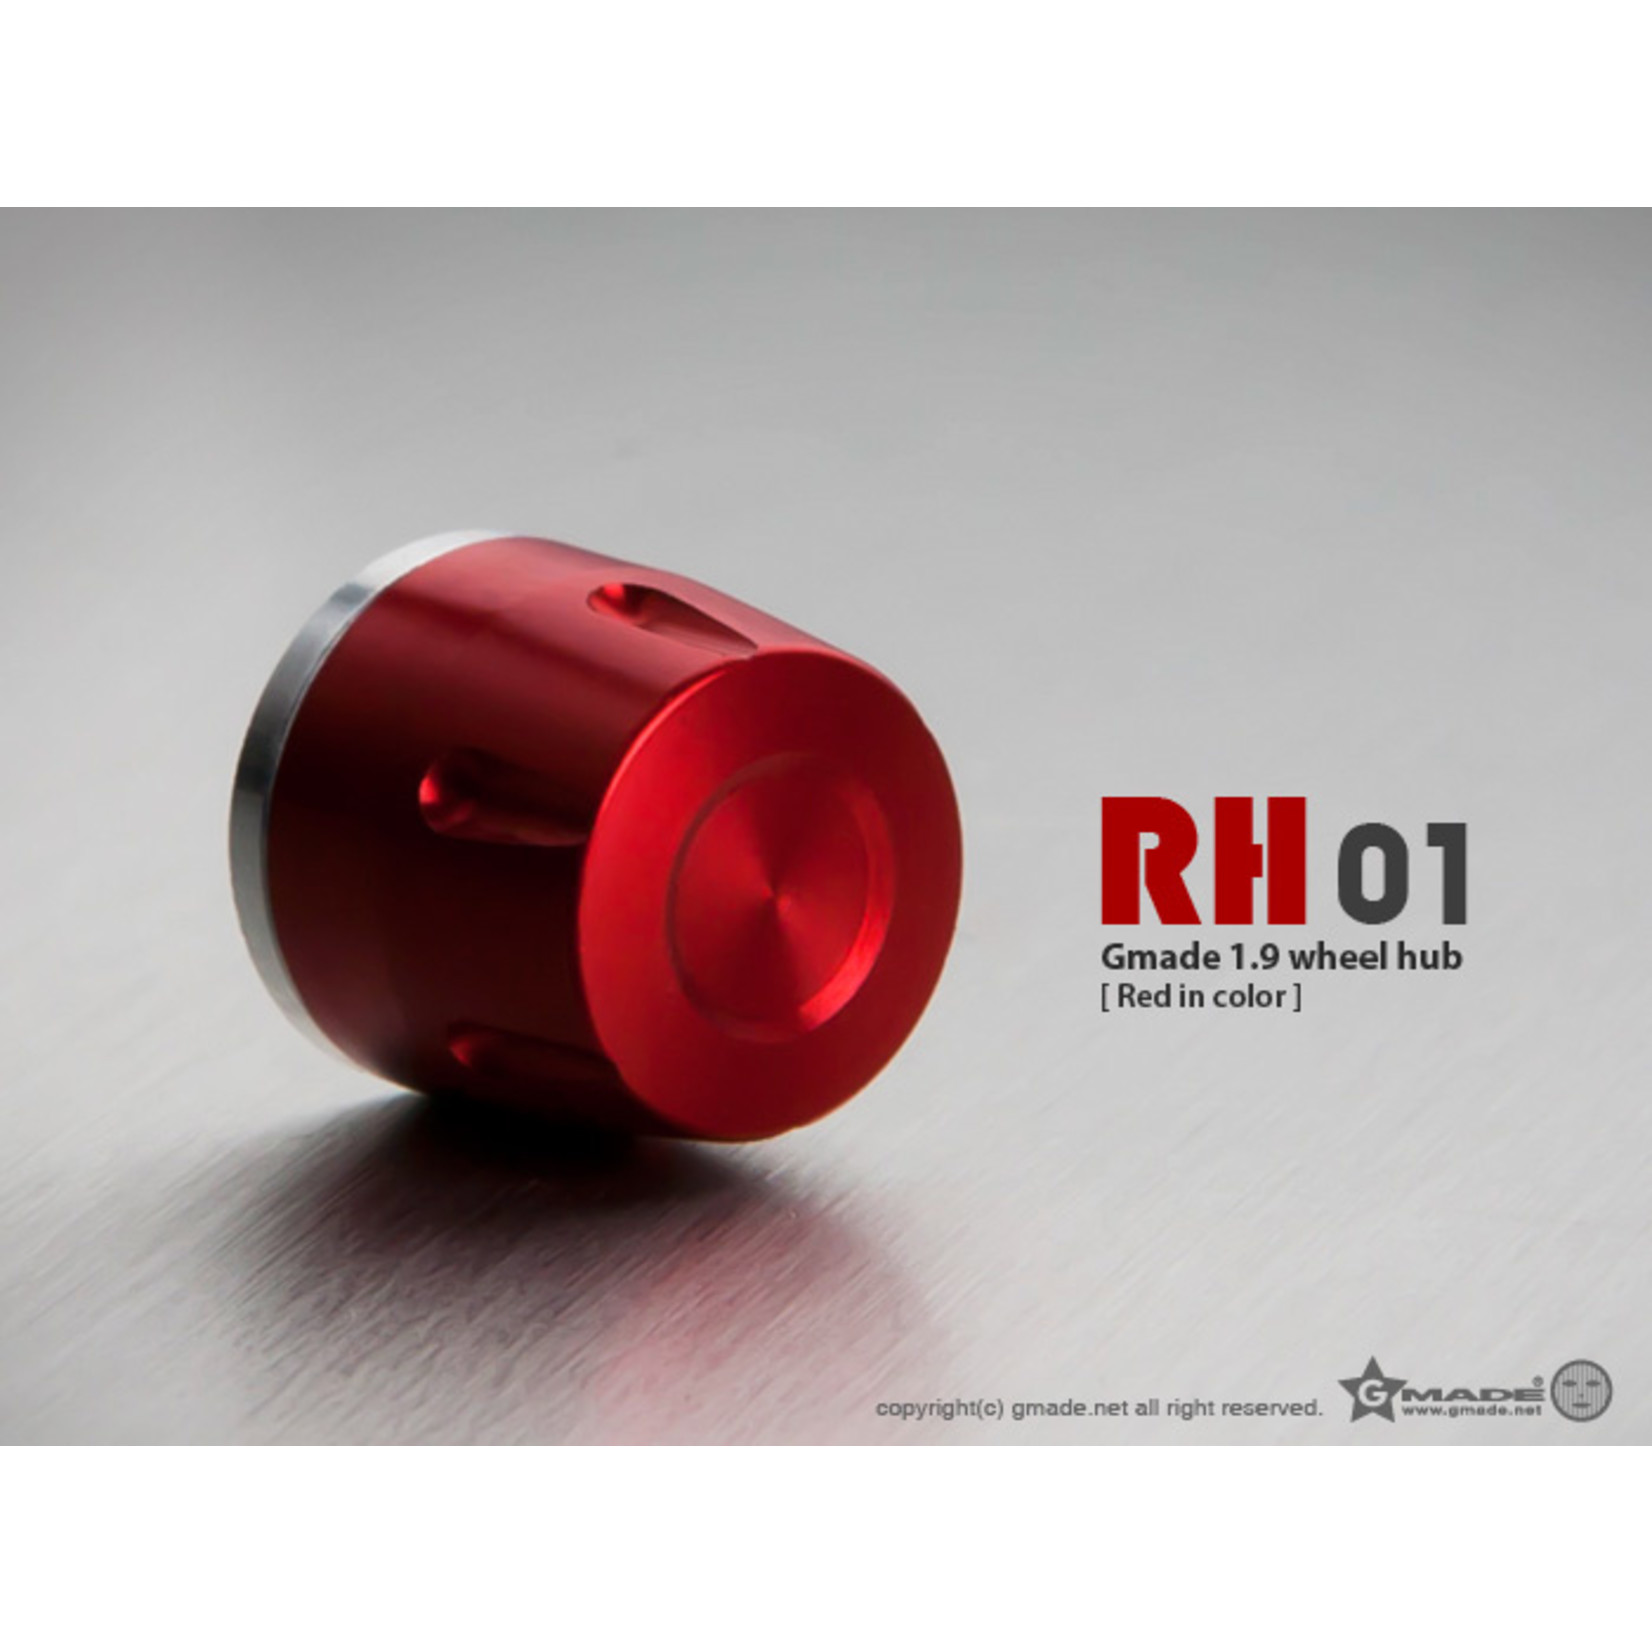 Gmade 1.9 RH01 Wheel Hubs (Red) (4)